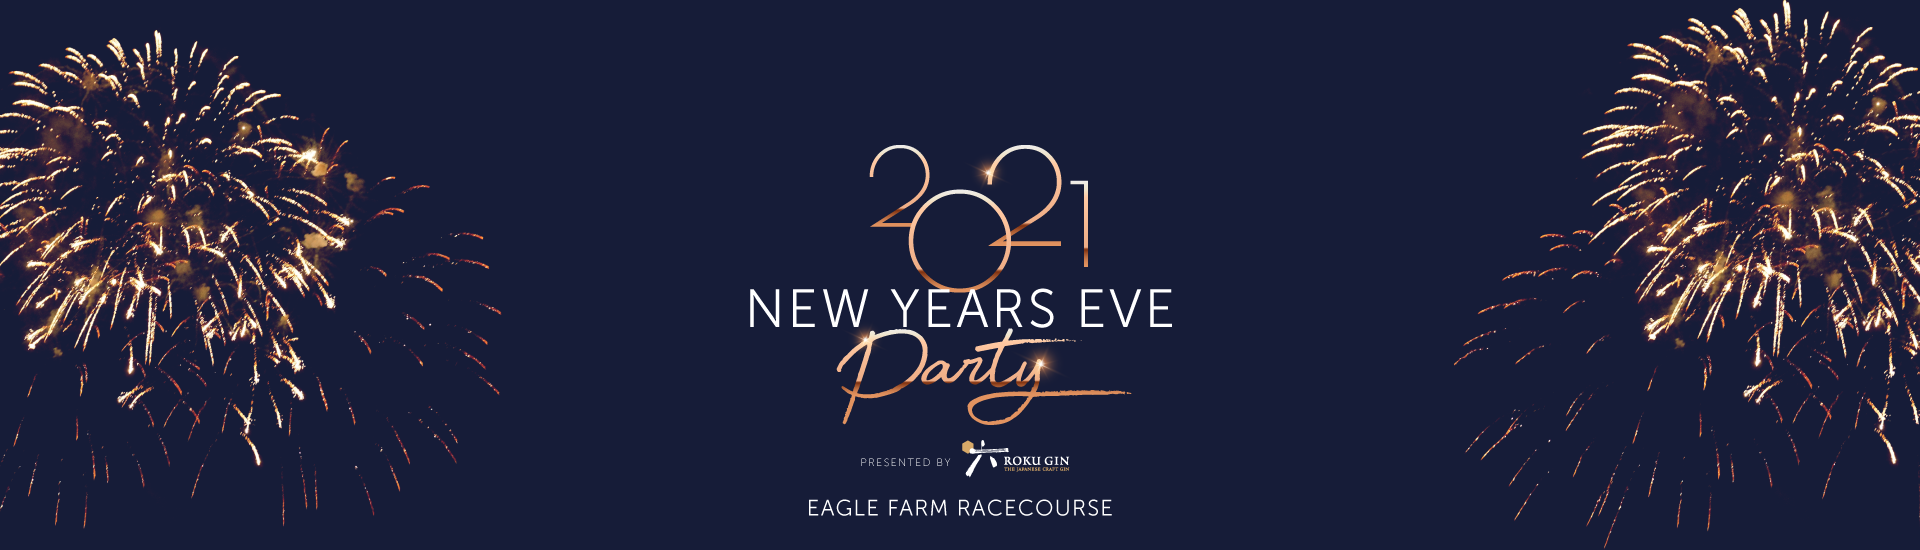 New Years Eve at Eagle Farm Racecourse | Brisbane Racing Club 